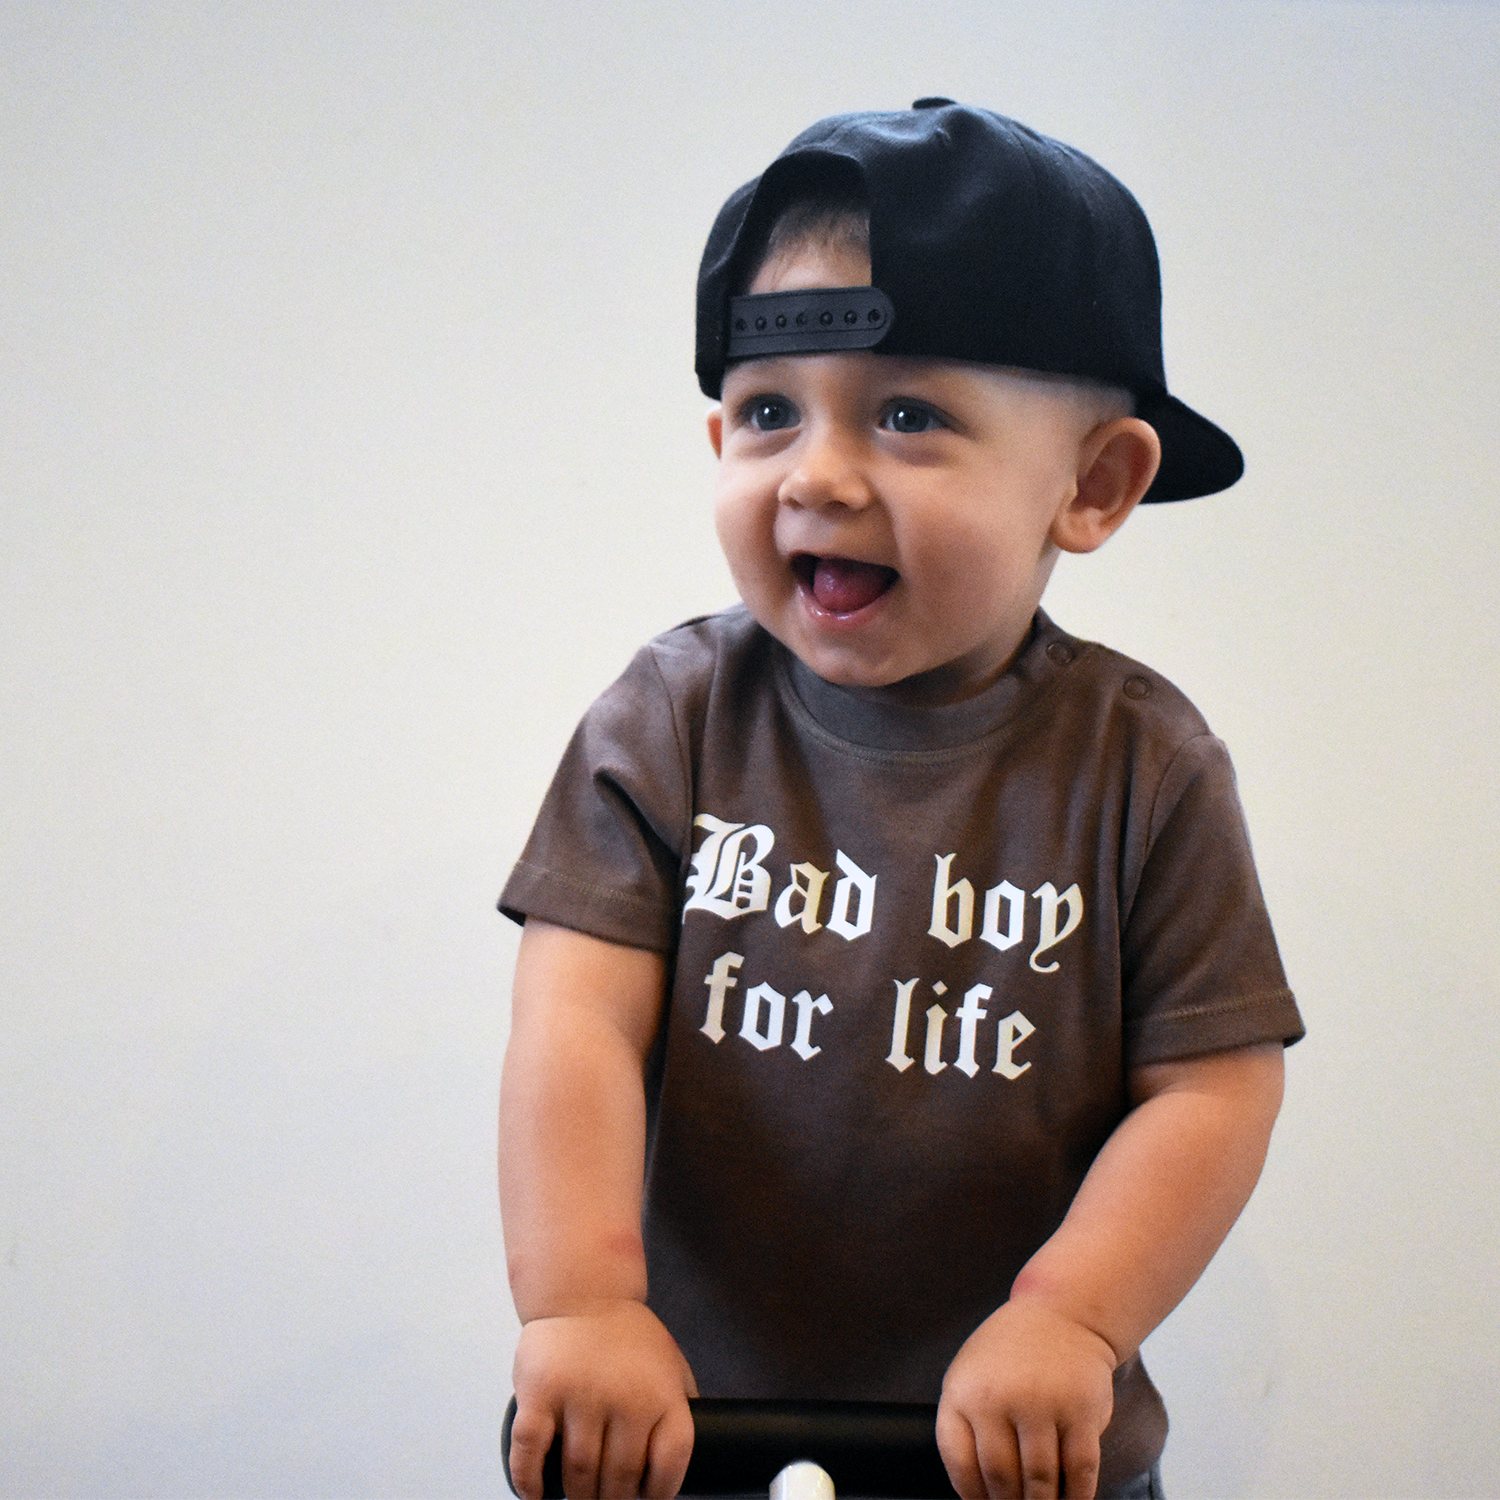 'Bad boy for life' baby shirt met korte mouwen